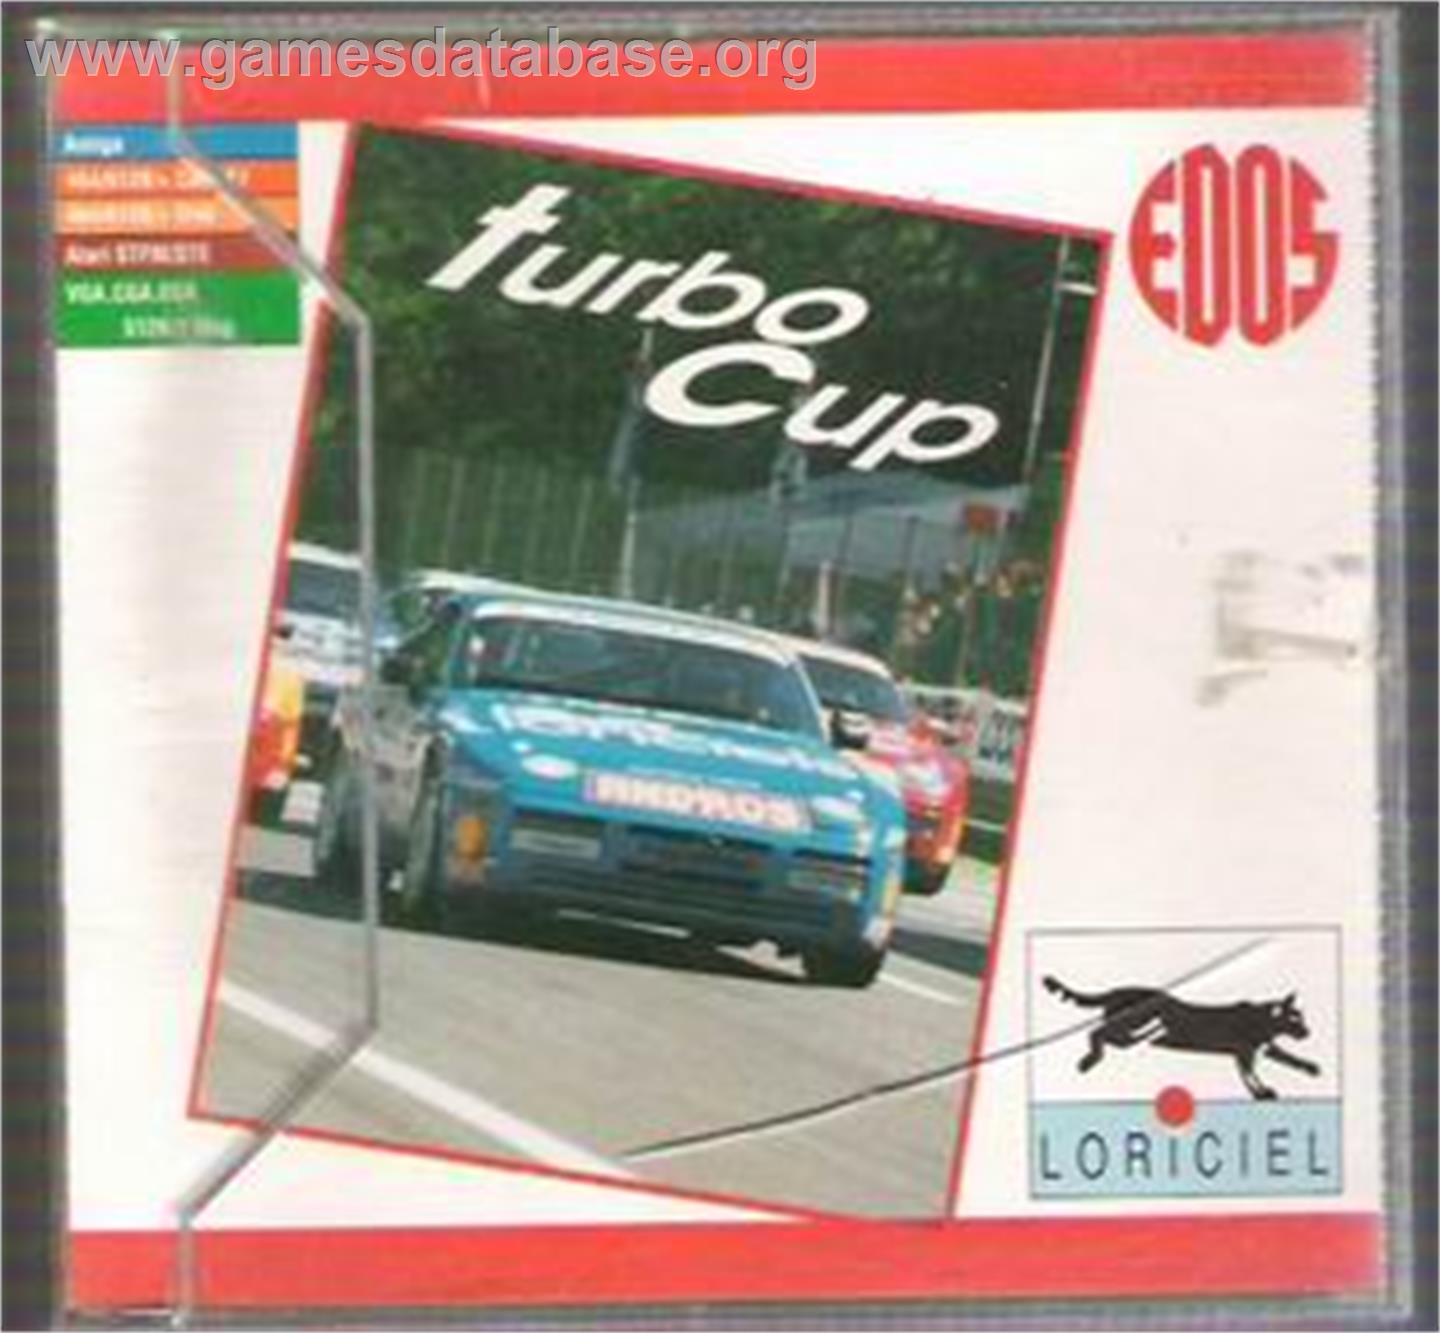 Turbo Cup - Atari ST - Artwork - Box